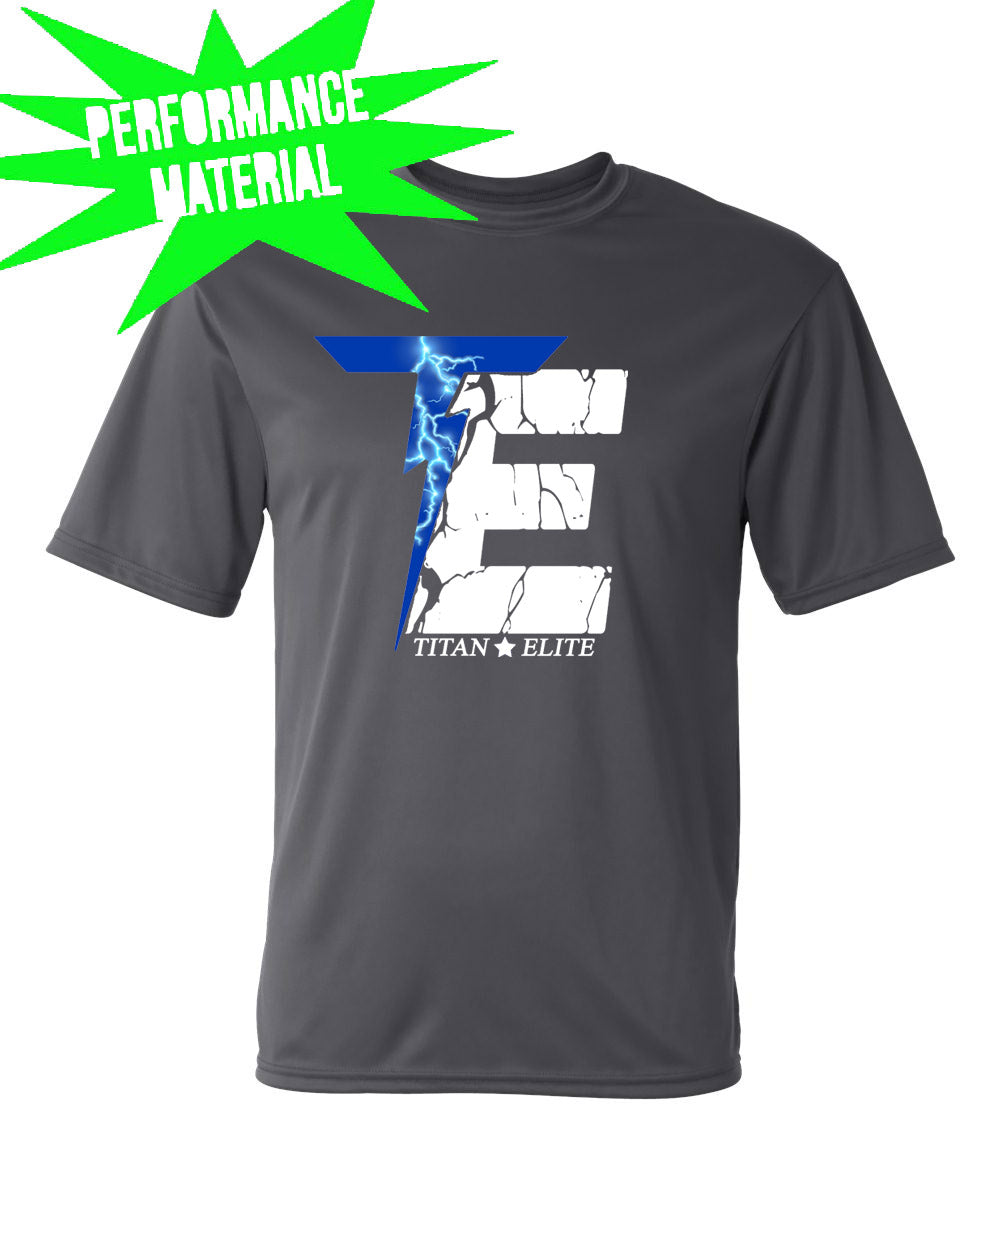 Titan Elite Performance Material design 2 T-Shirt